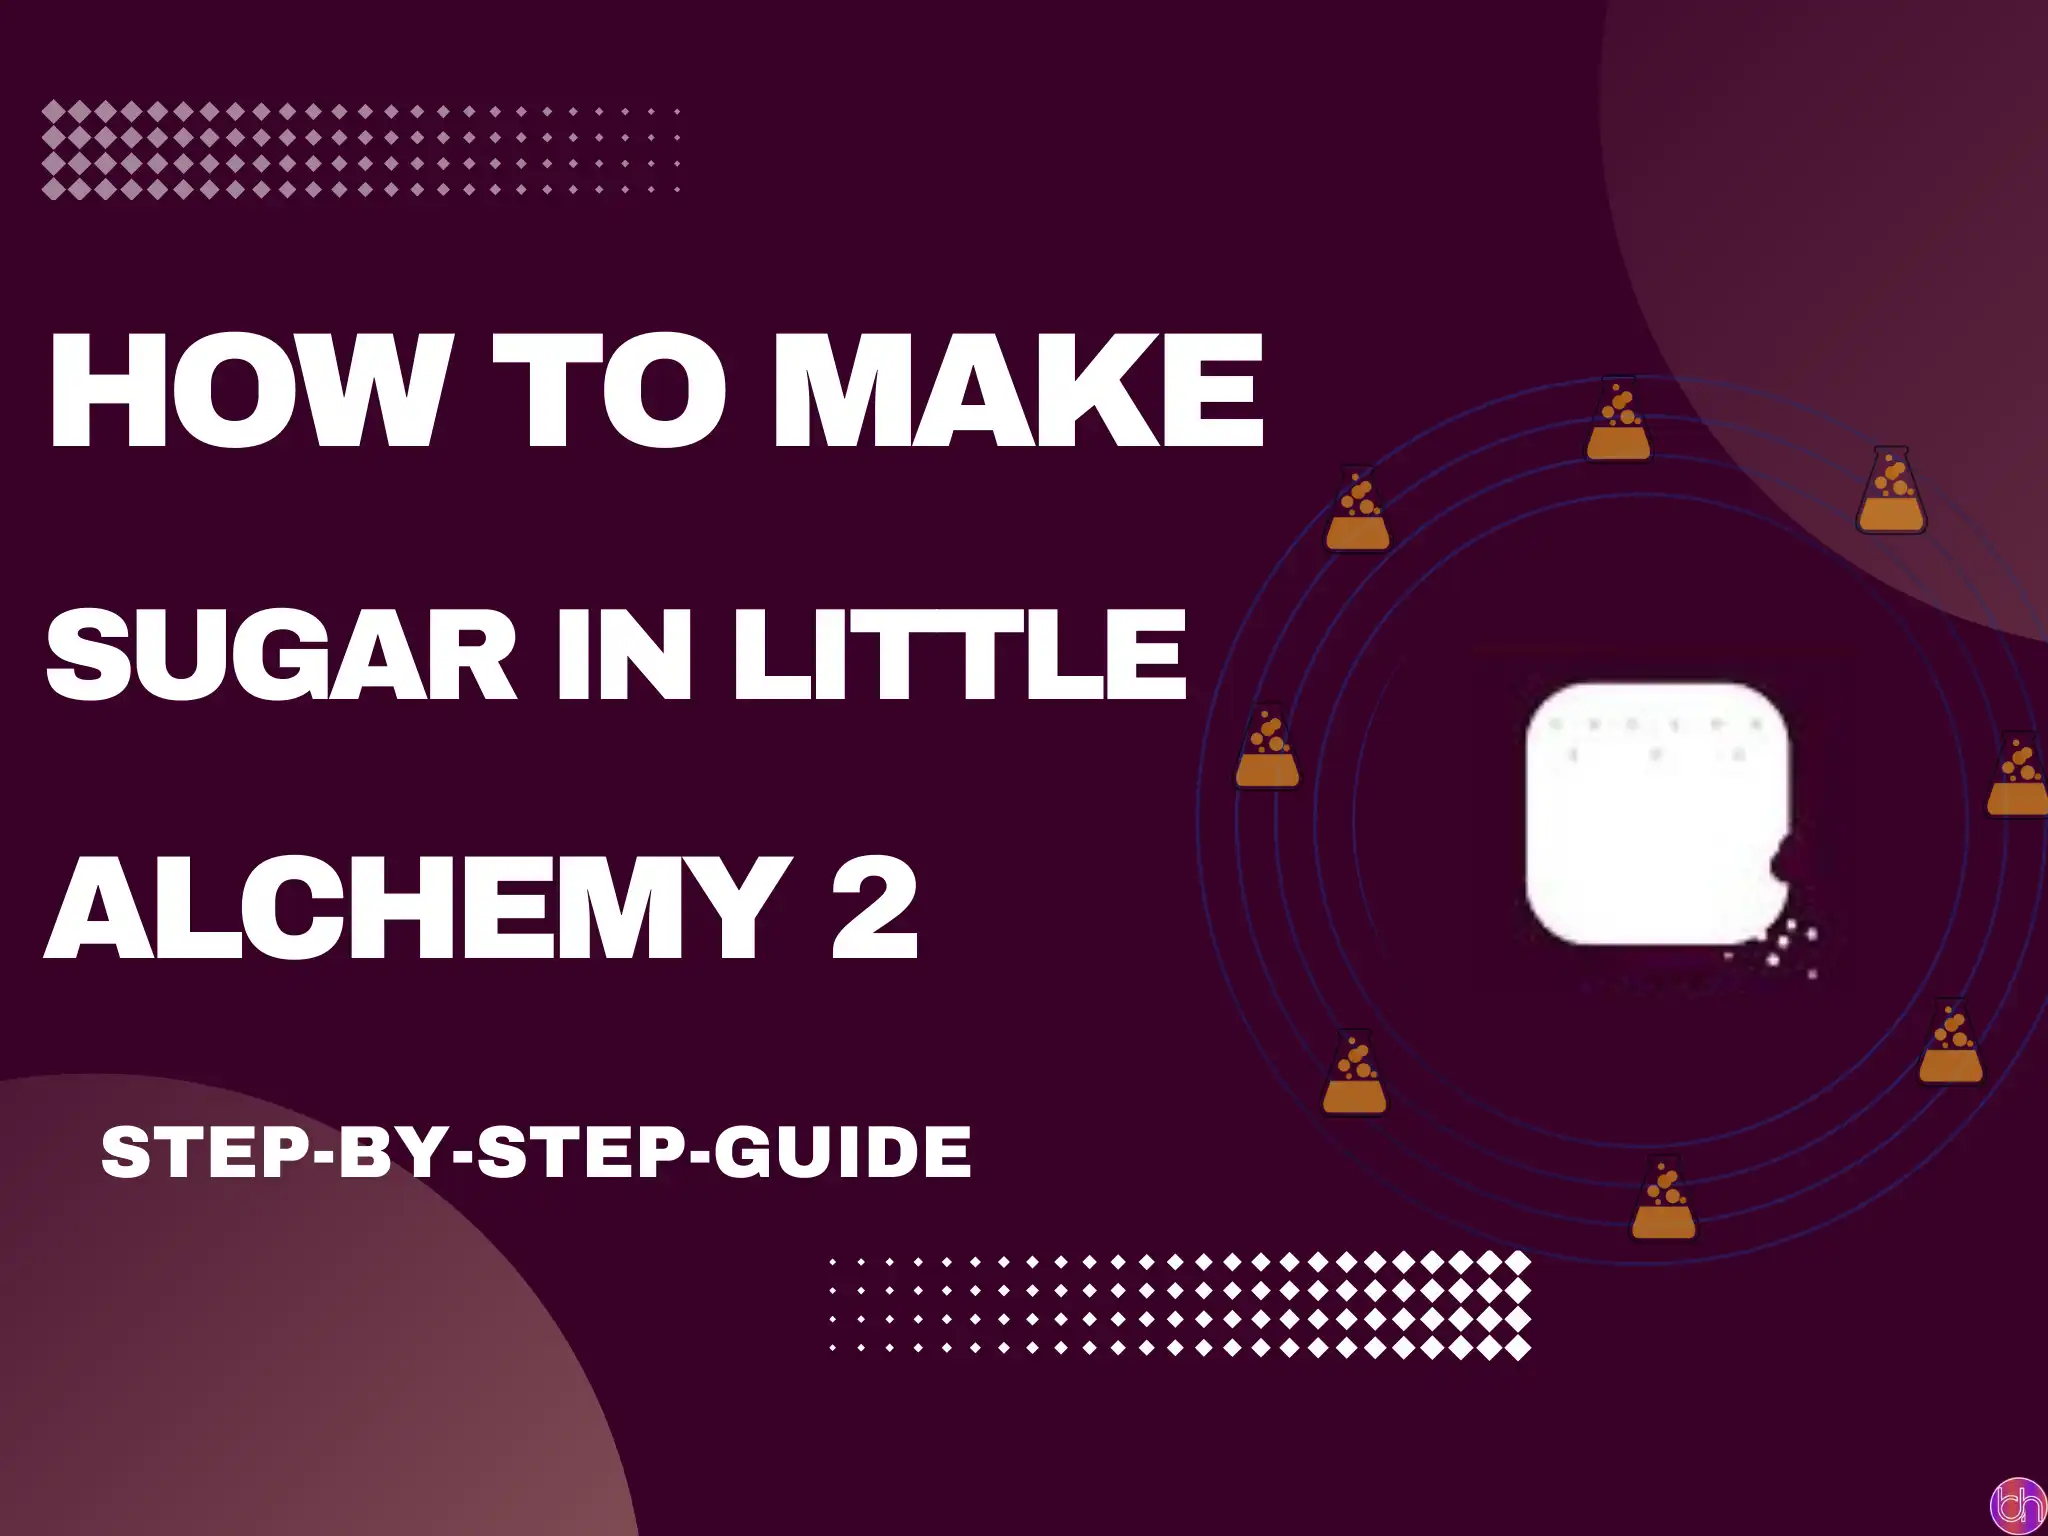 How to make Sugar in Little Alchemy 2